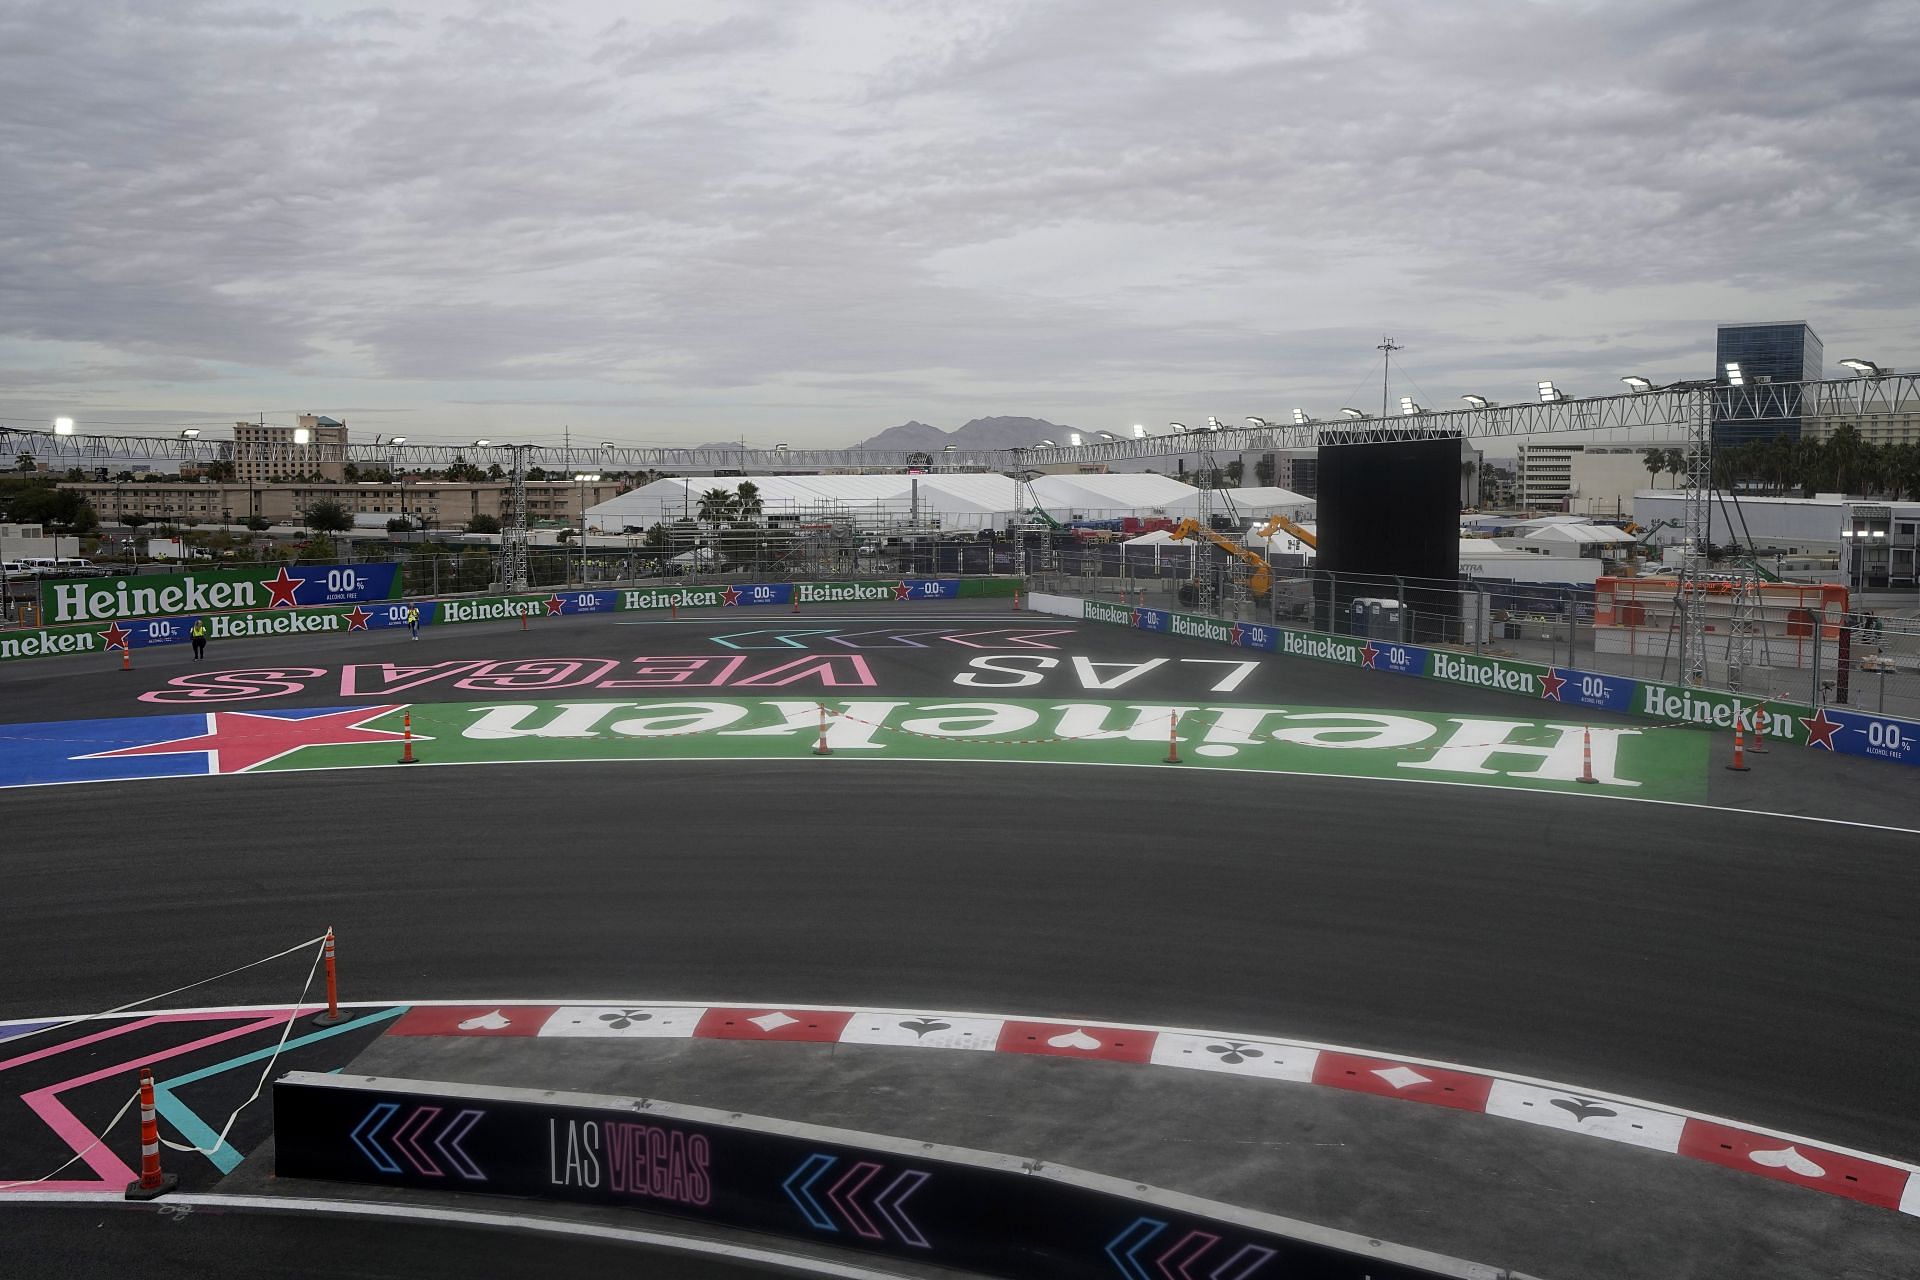 F1 Las Vegas Auto Racing